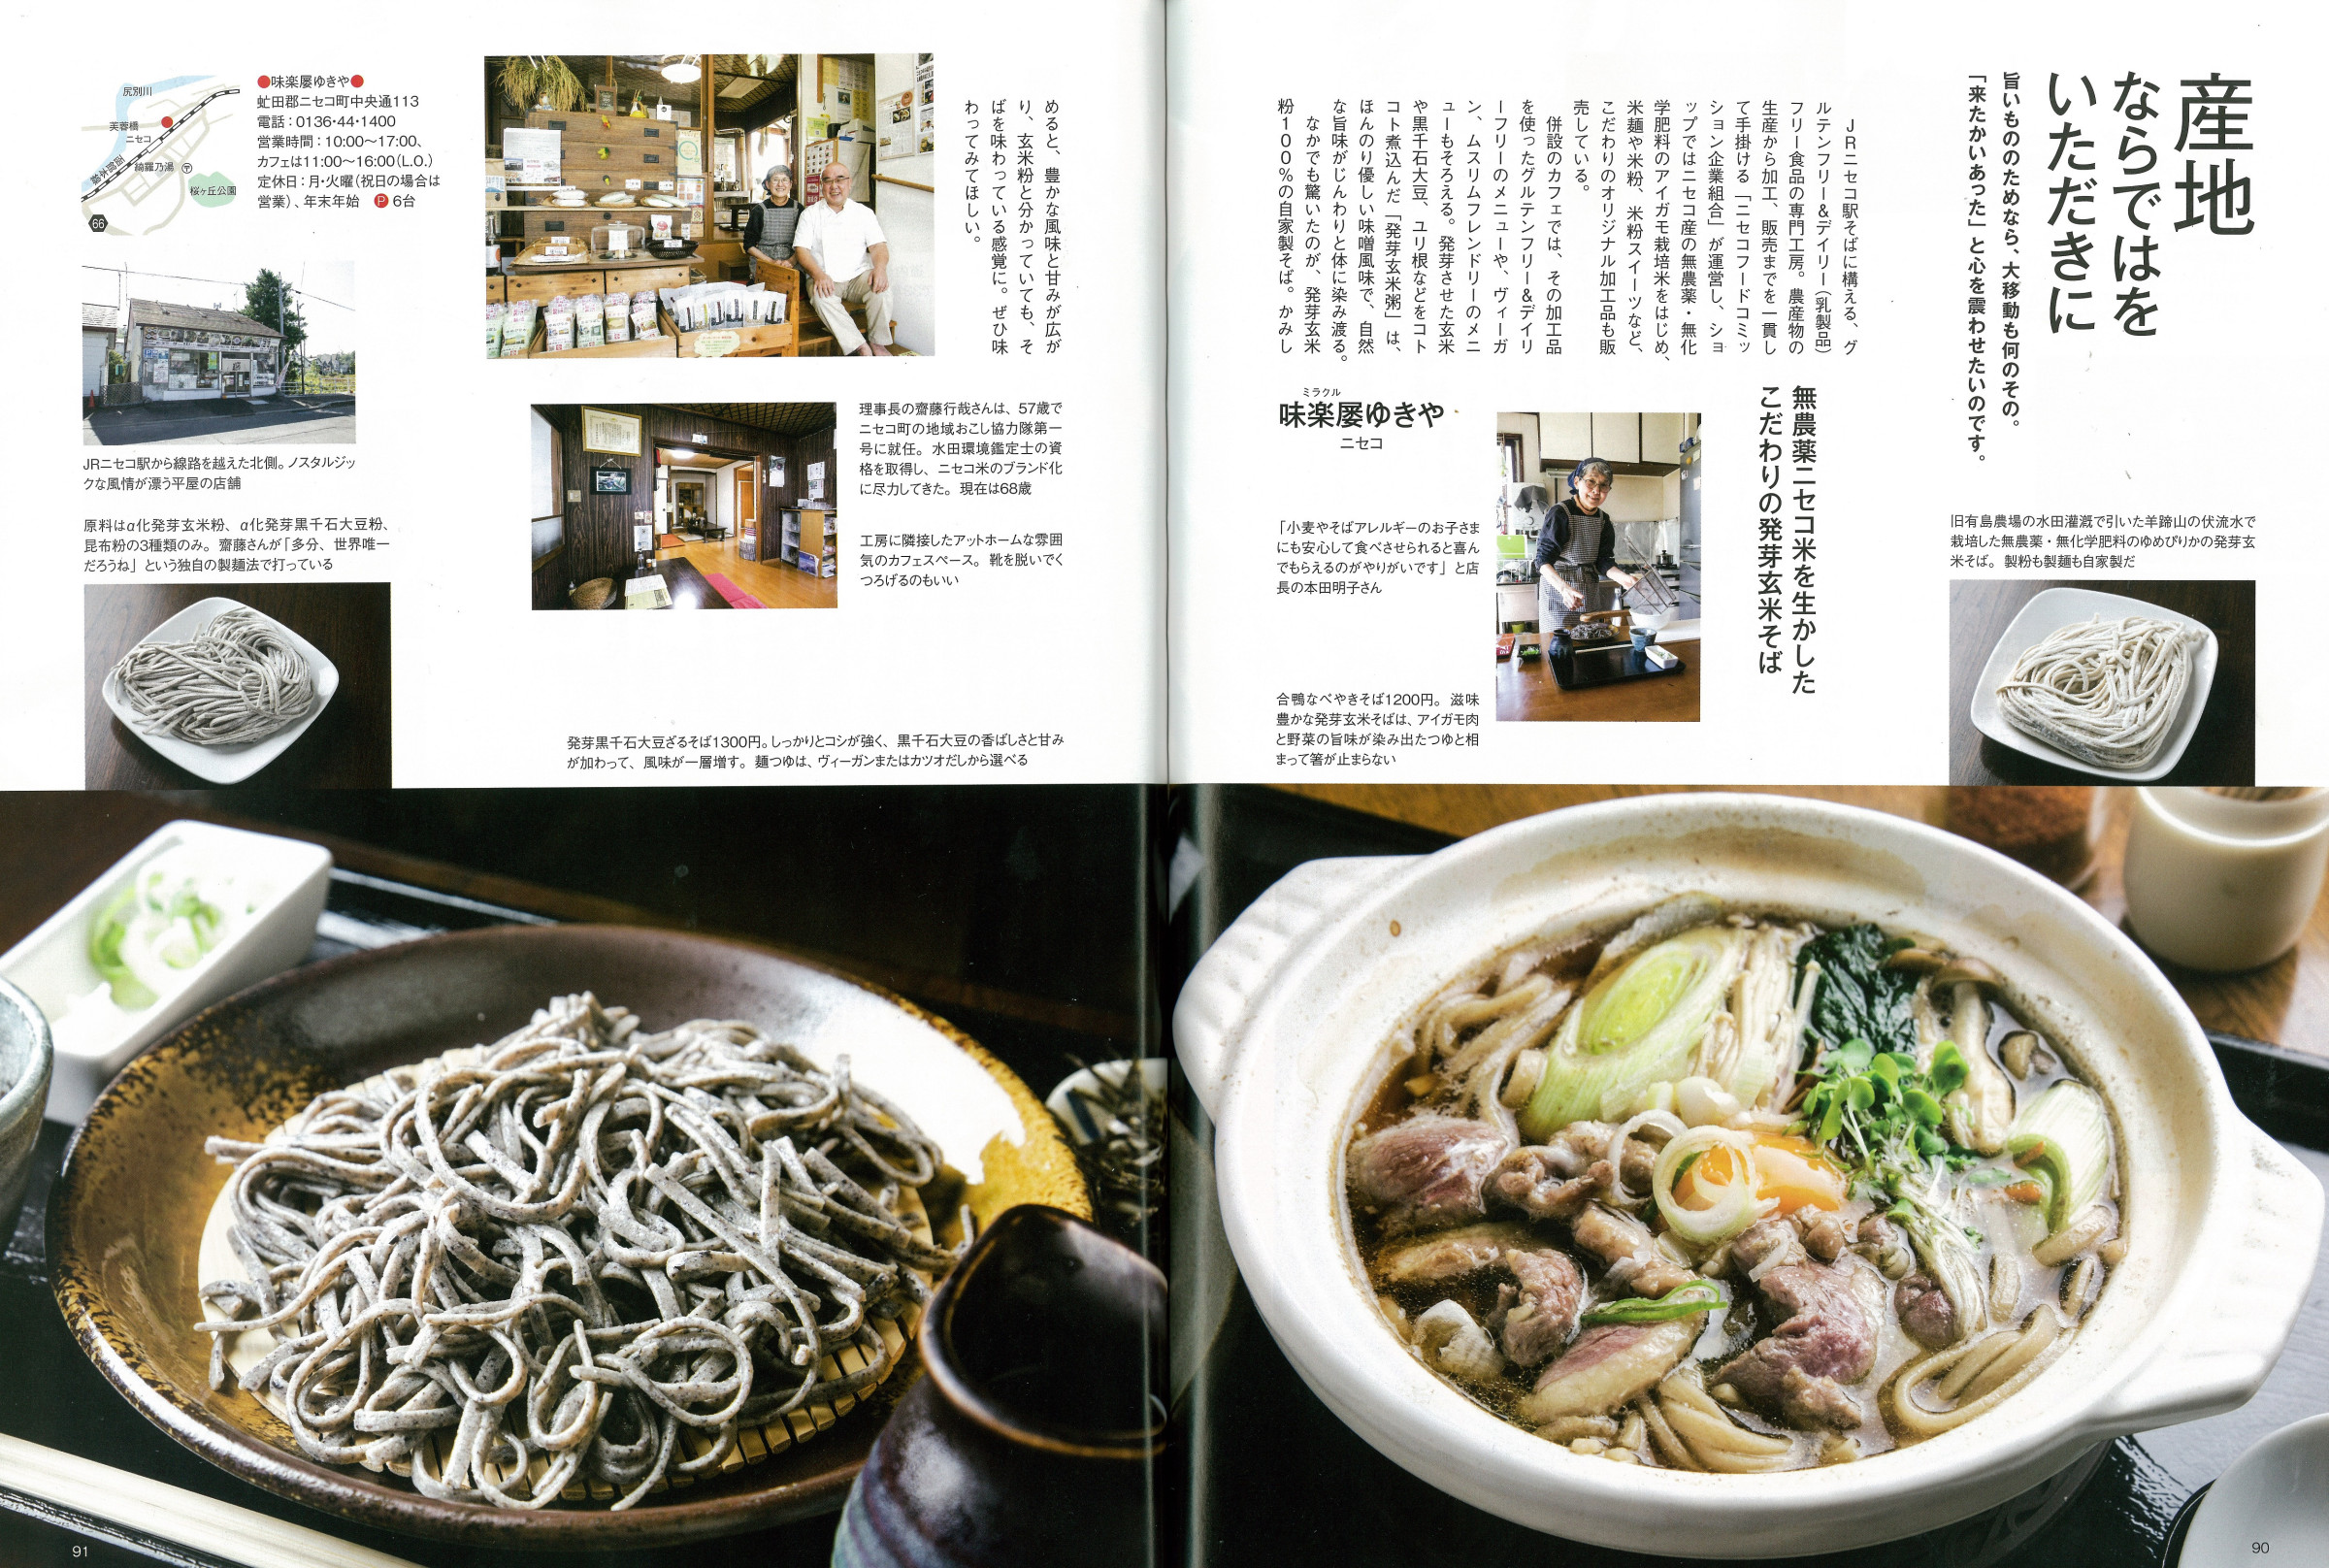 Niseko made noodle place 小麦･乳由来･添加物なし･発芽玄米そば･米うどん･     発芽黒千石そば･パスタ ニセコ製麺所